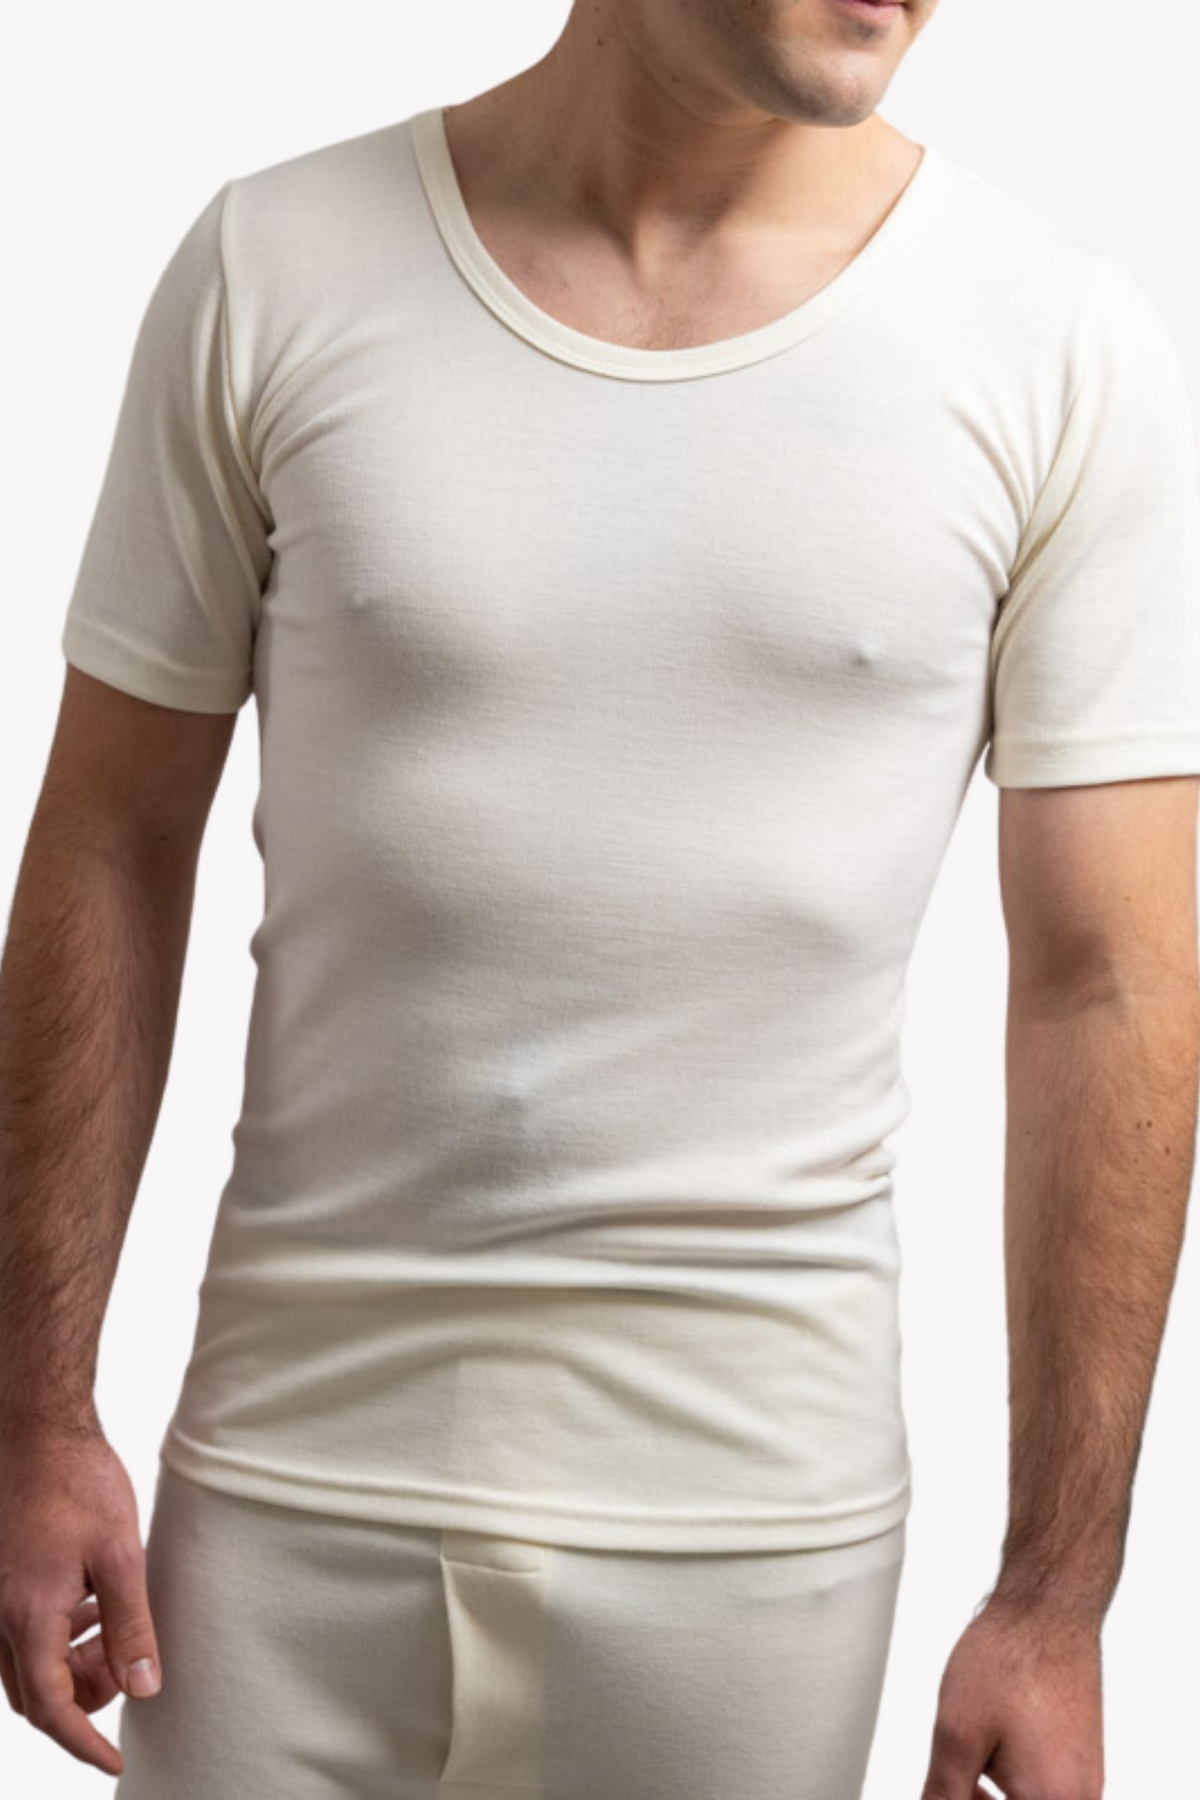 Men's Classic Thermal Top (Short Sleeves)